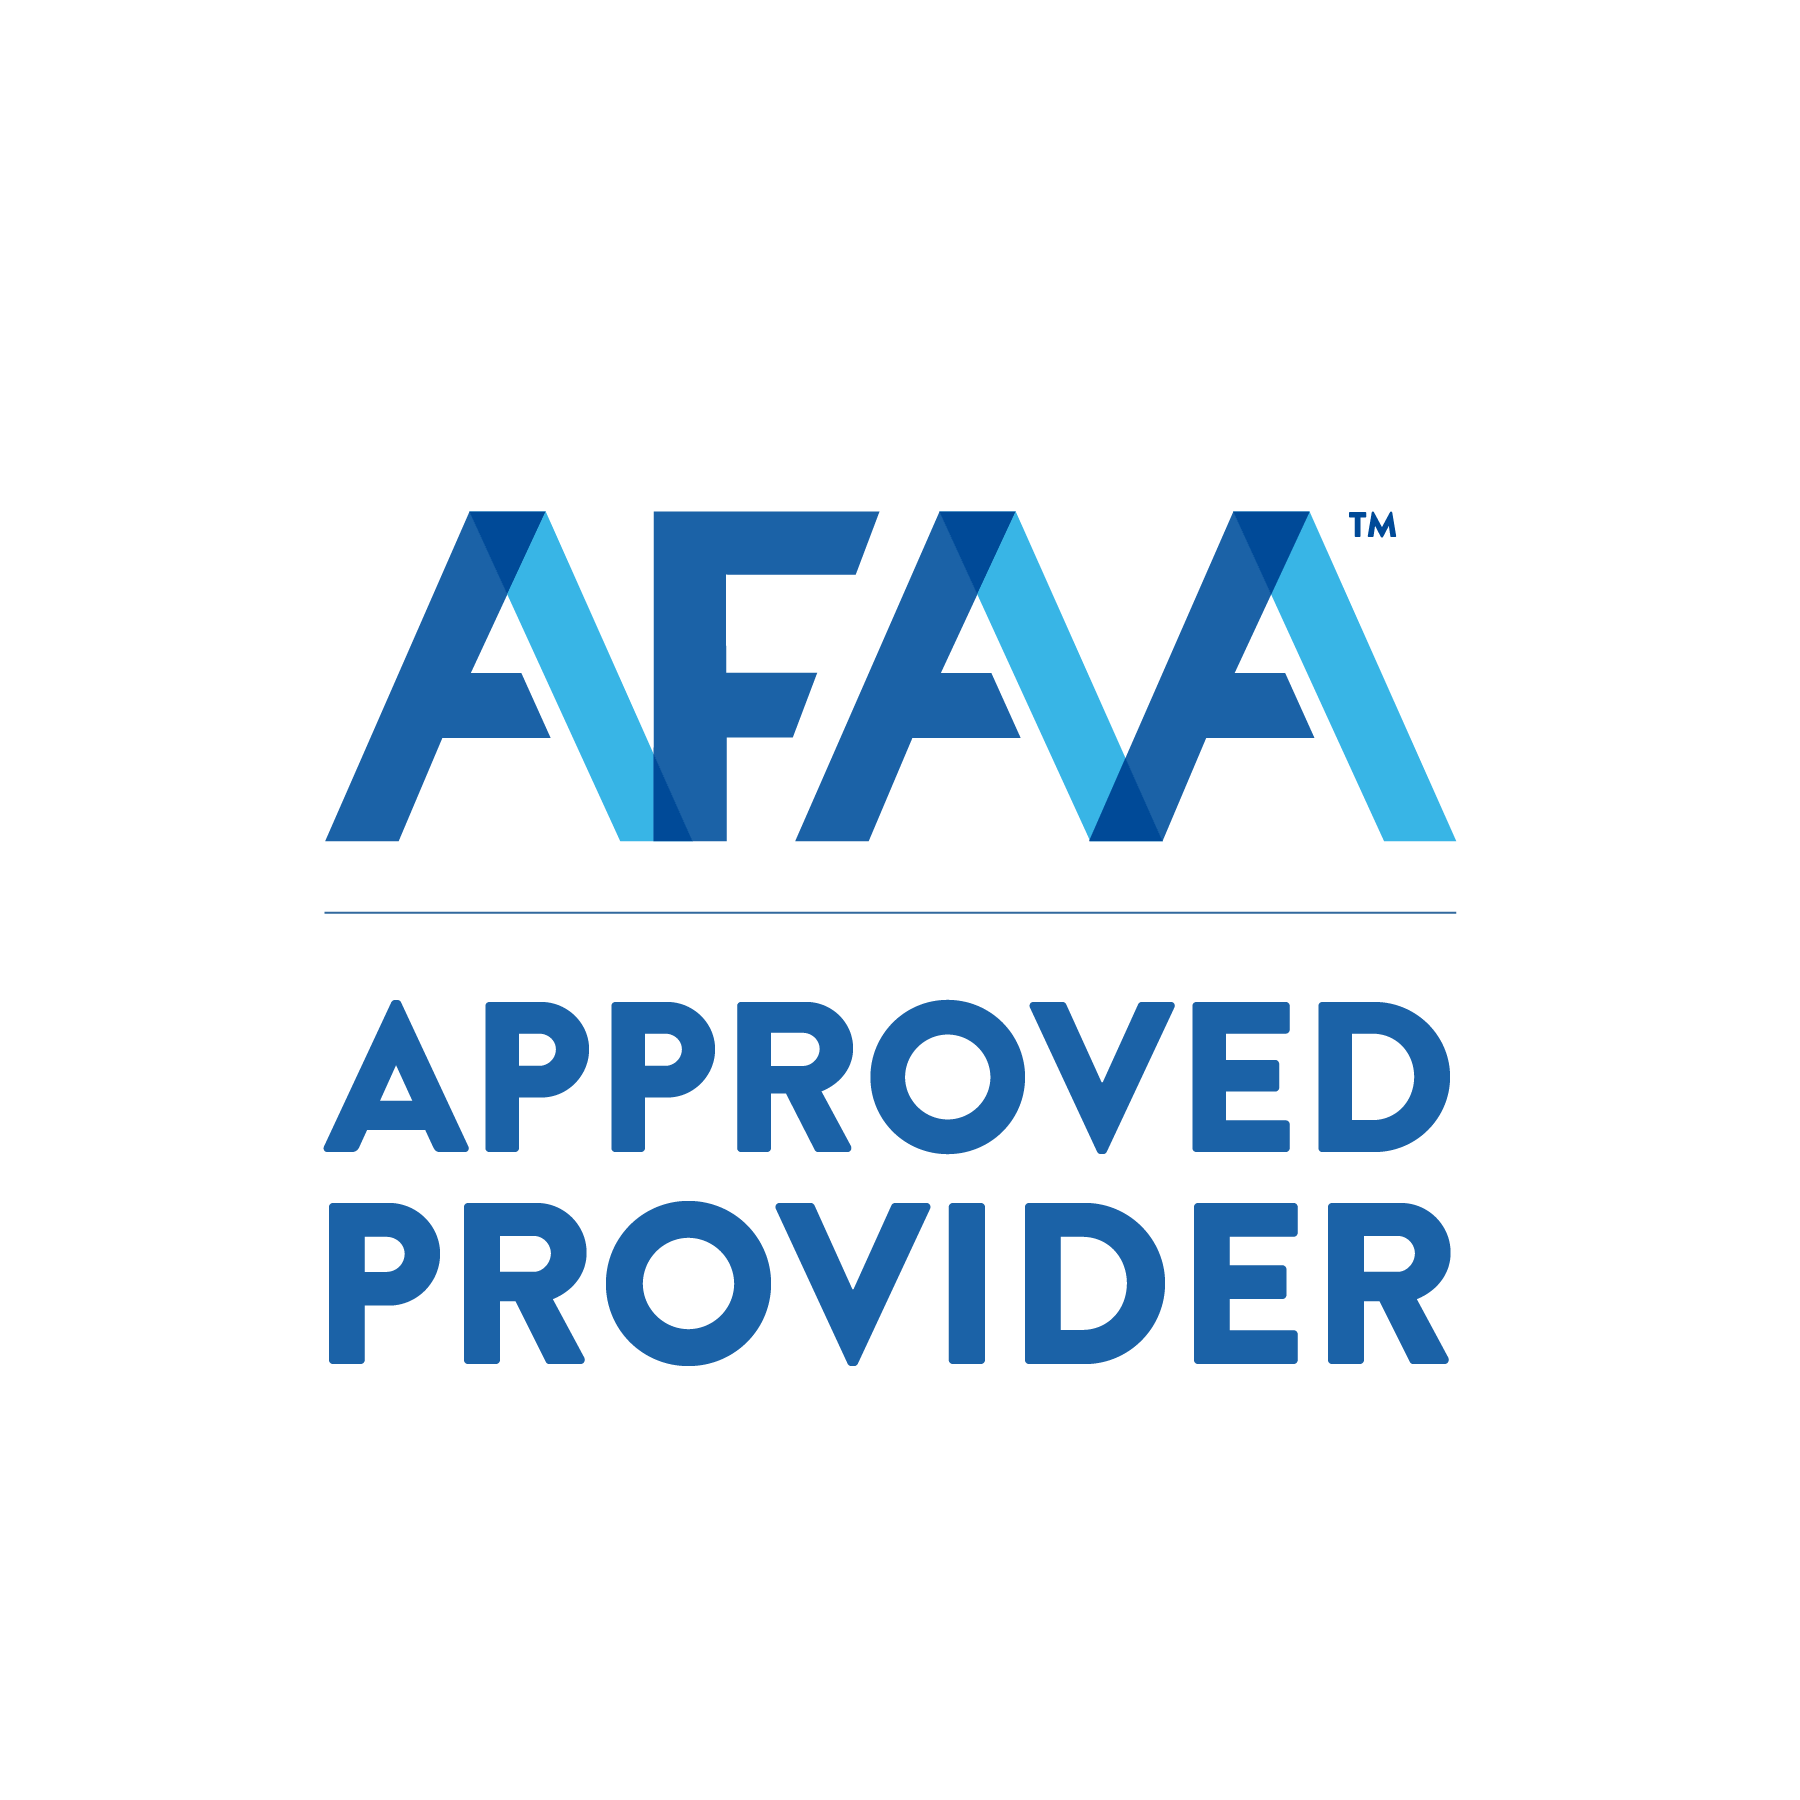 Logotipo de proveedor de la AFAA